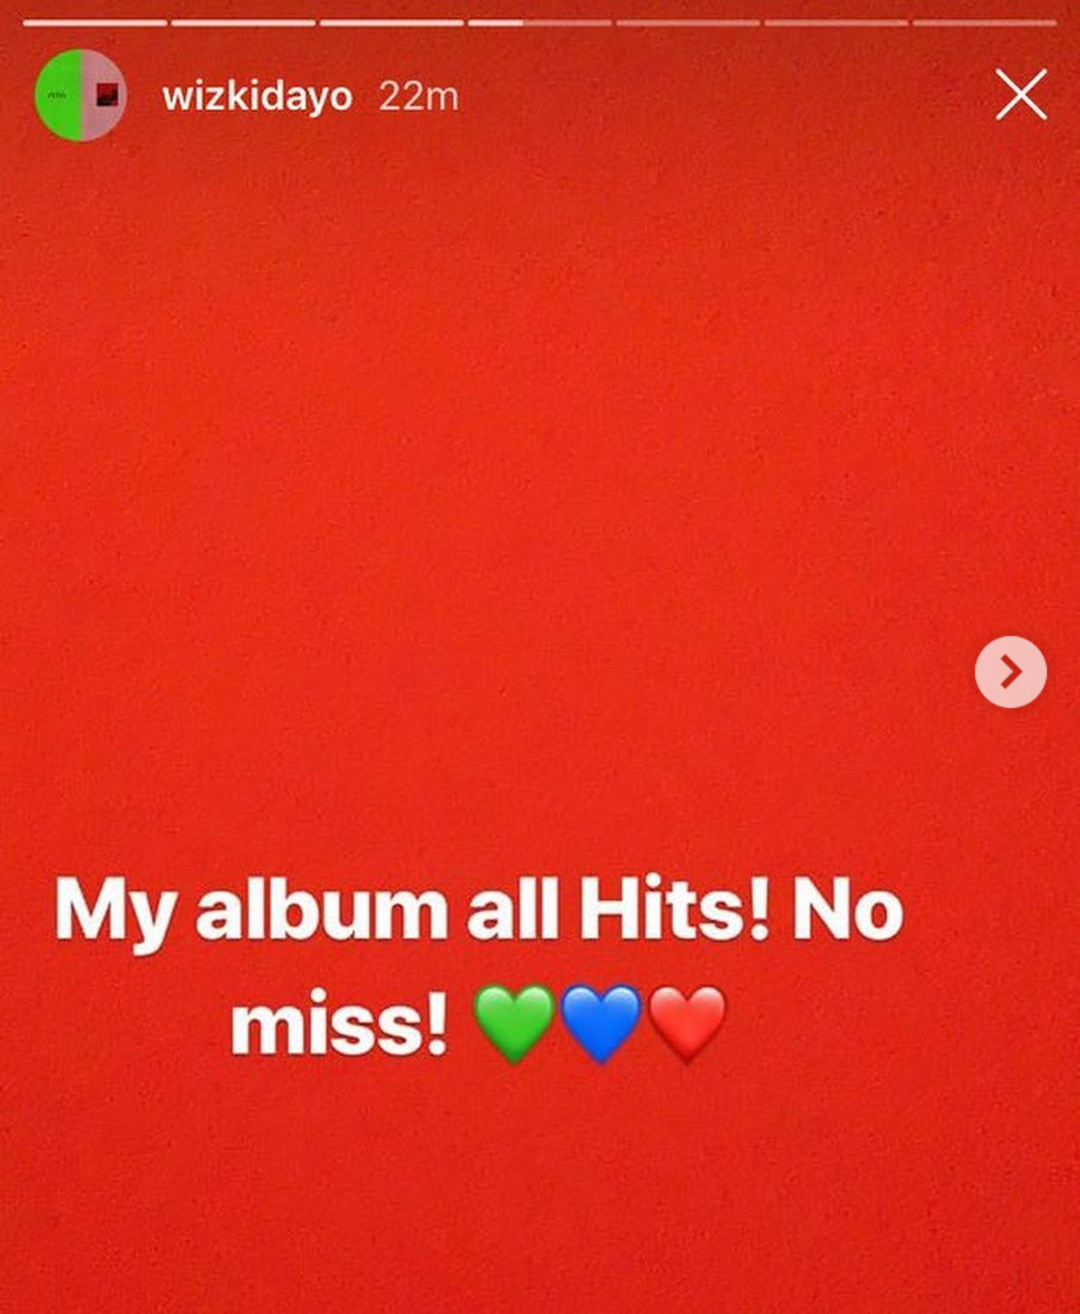 Wizkid reveals that his new album might hurt some feelings